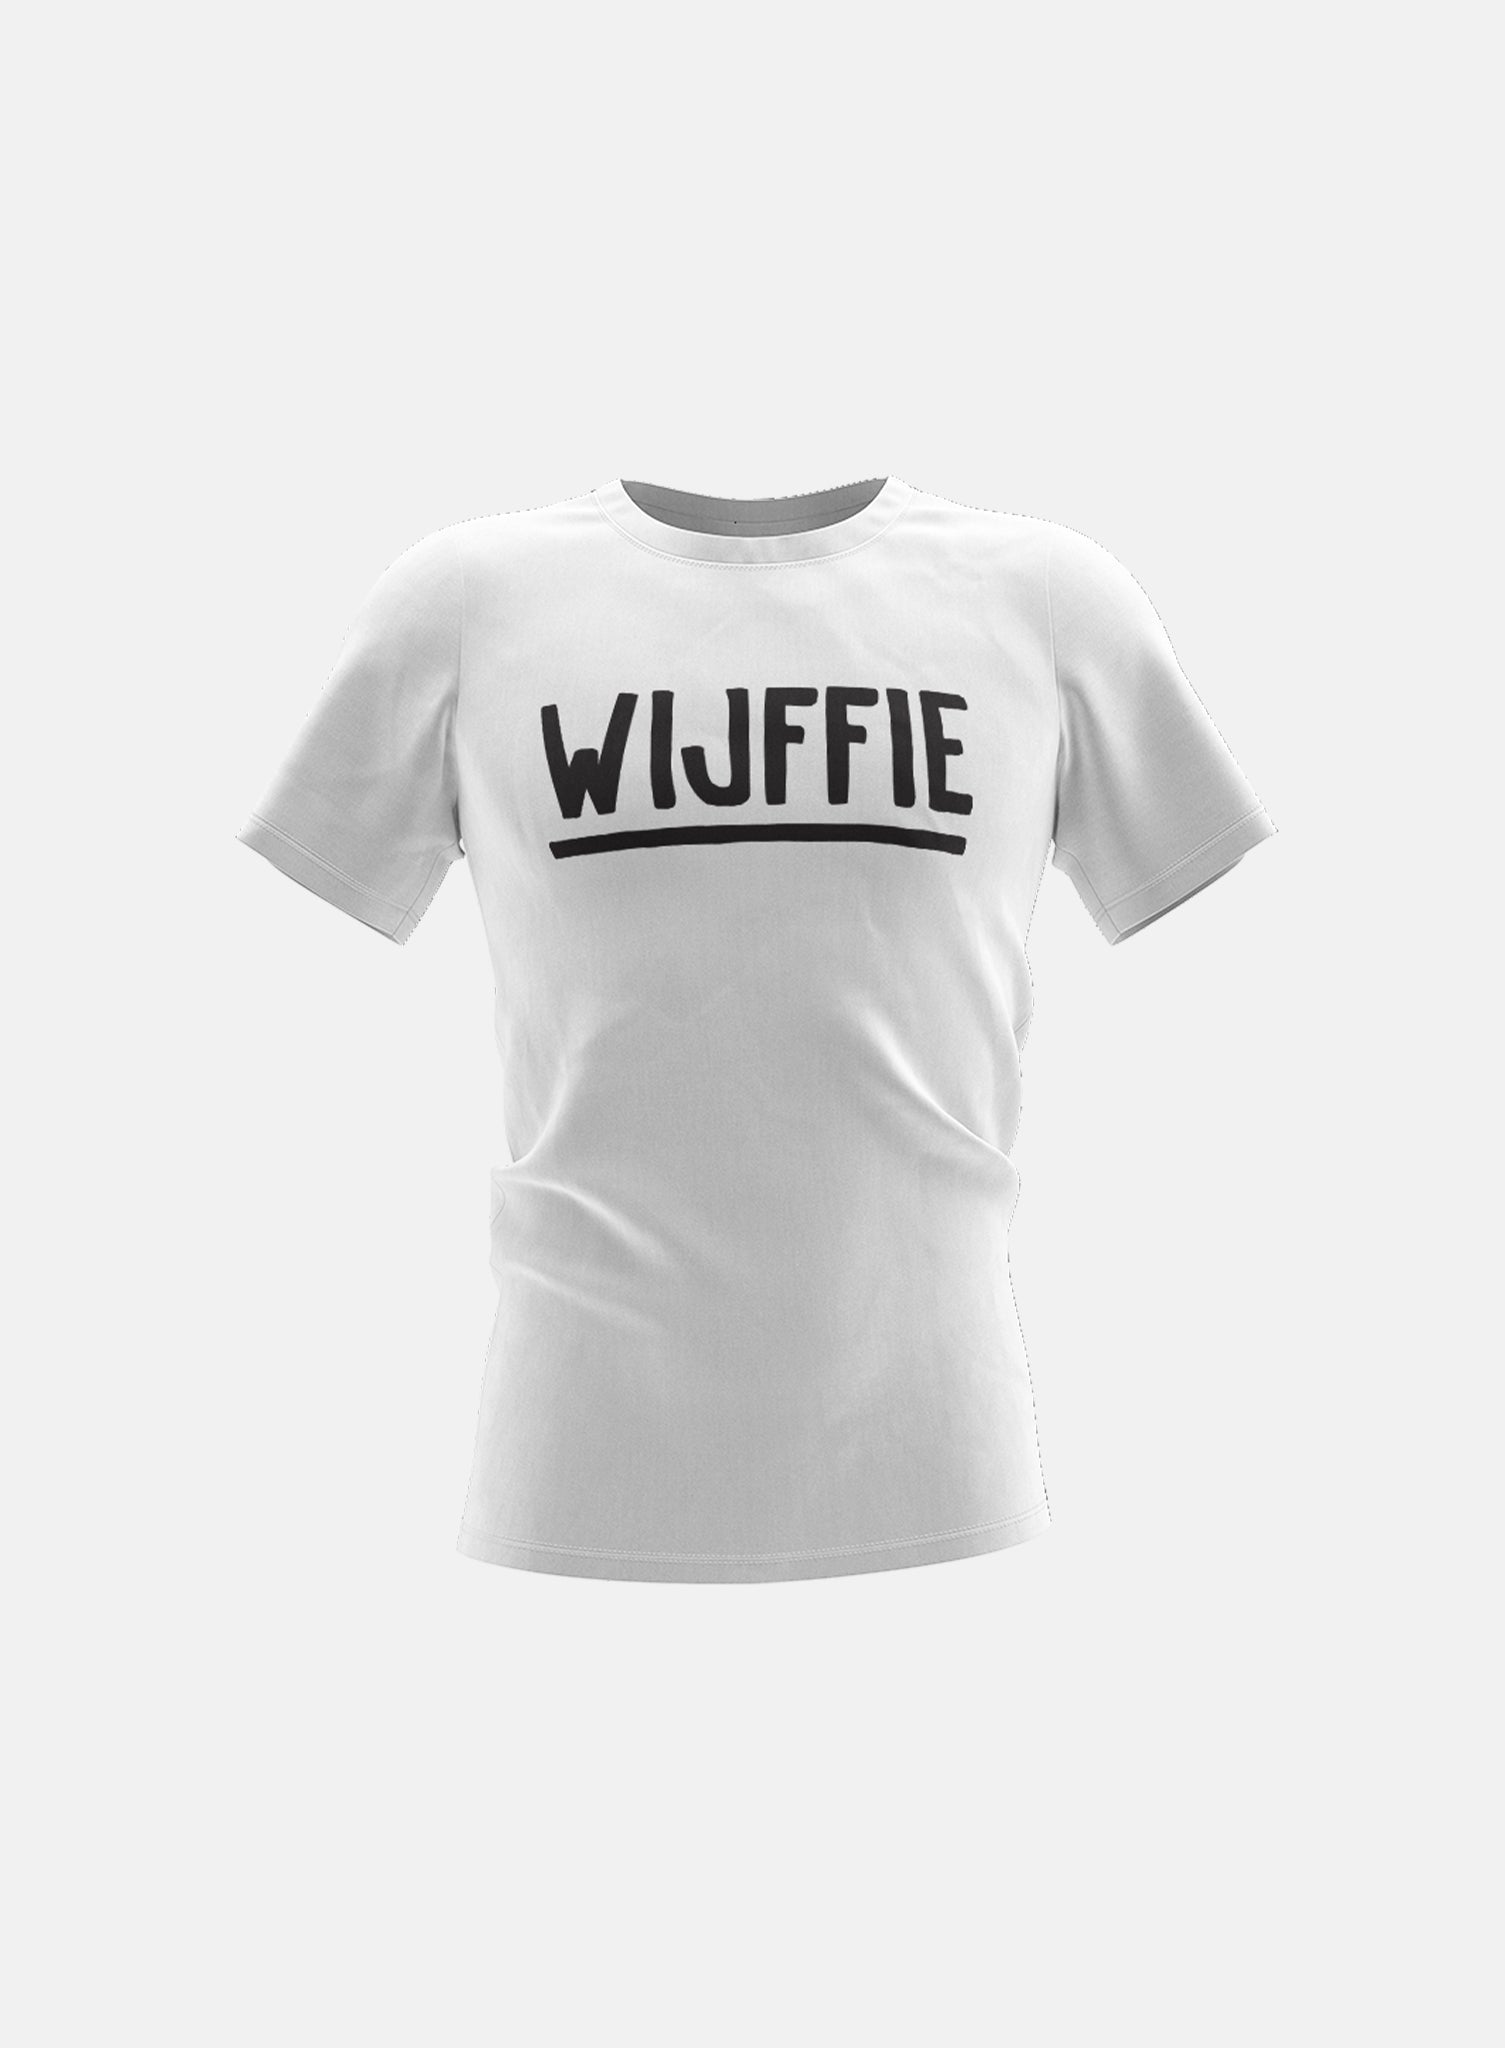 'WIJFFIE' SHIRT (KIDS)